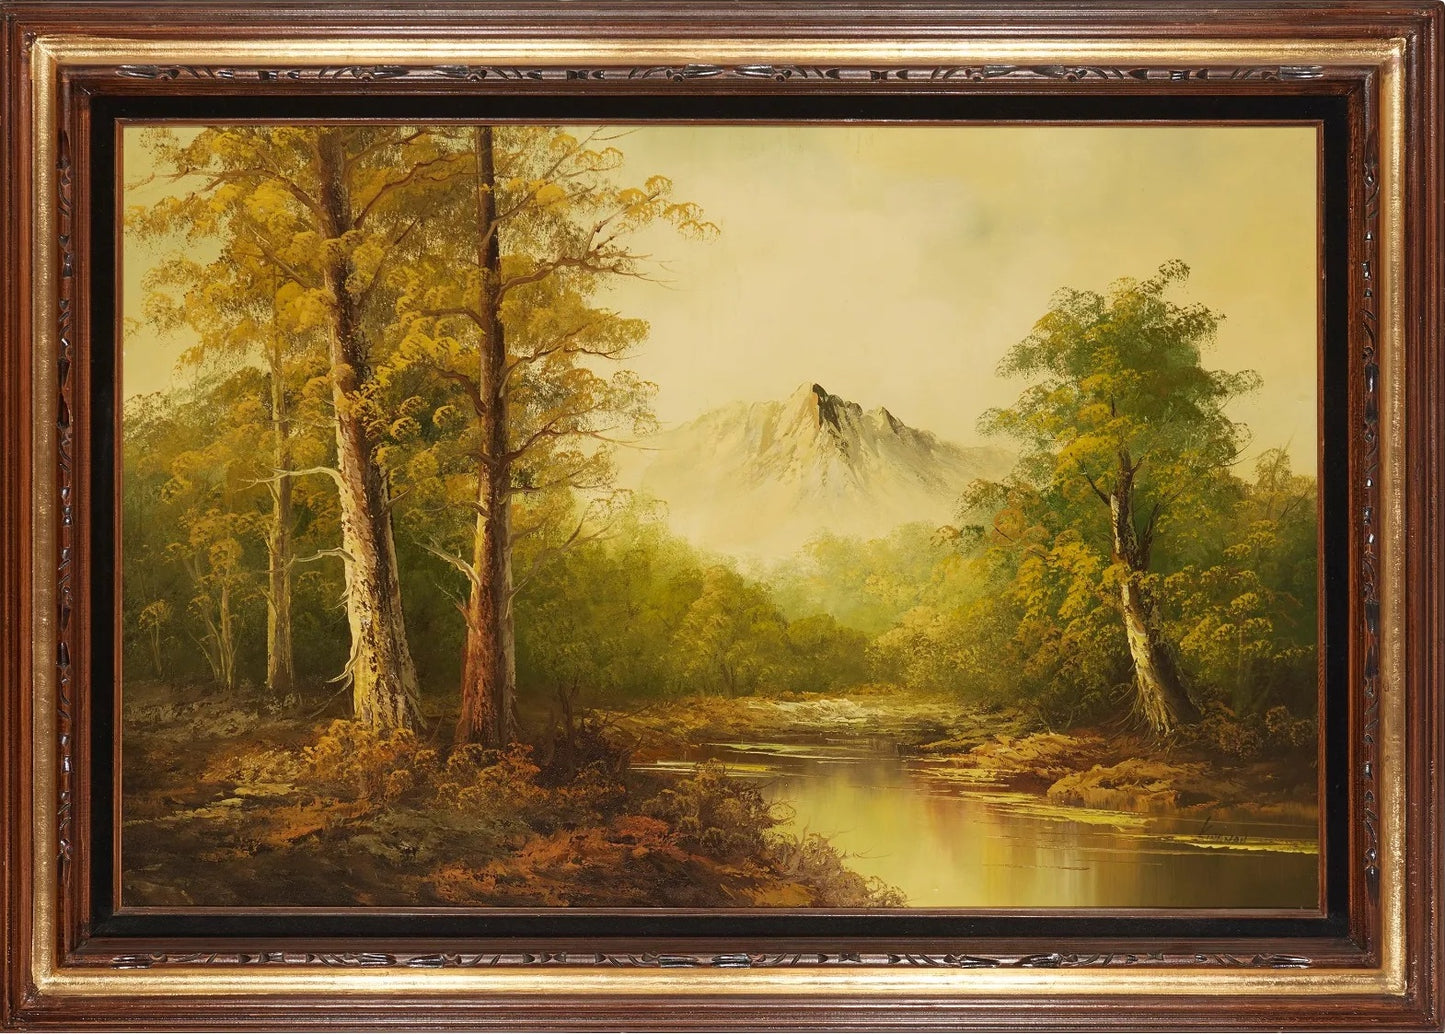 Eugene Kingman - A River in a Mountainous Landscape 24" x 36"